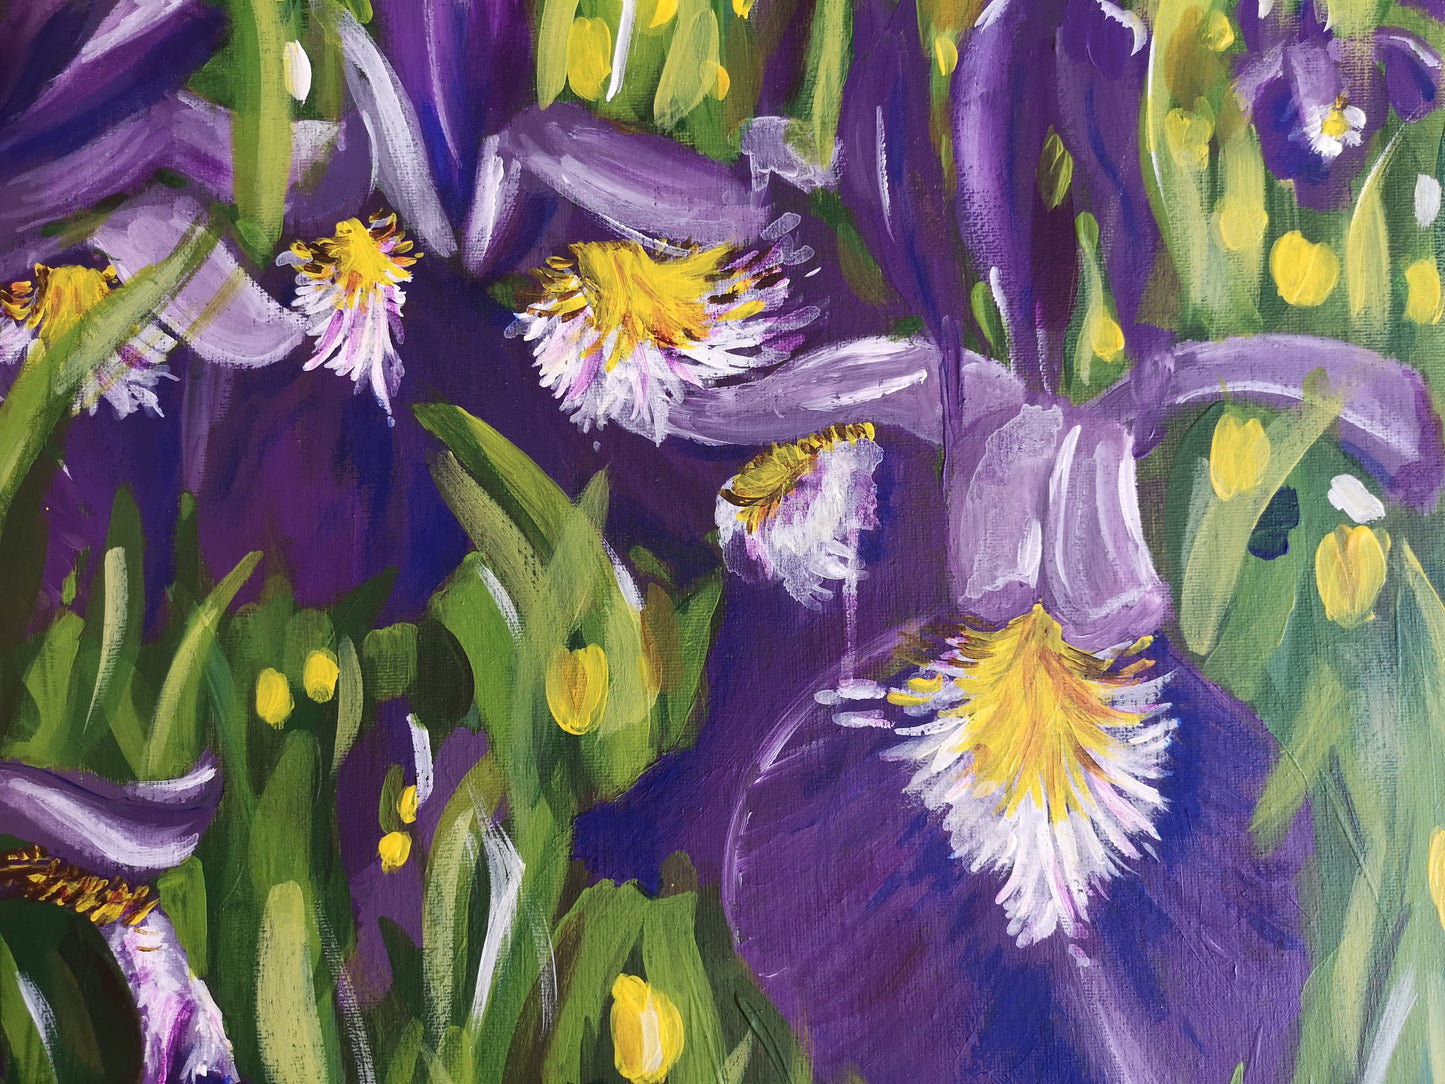 Acrylic Painting  Details brushstrokes Iris Field Landscape, abstract art, purple, green, yellow, white paint, judy century, original canvas painting, close up